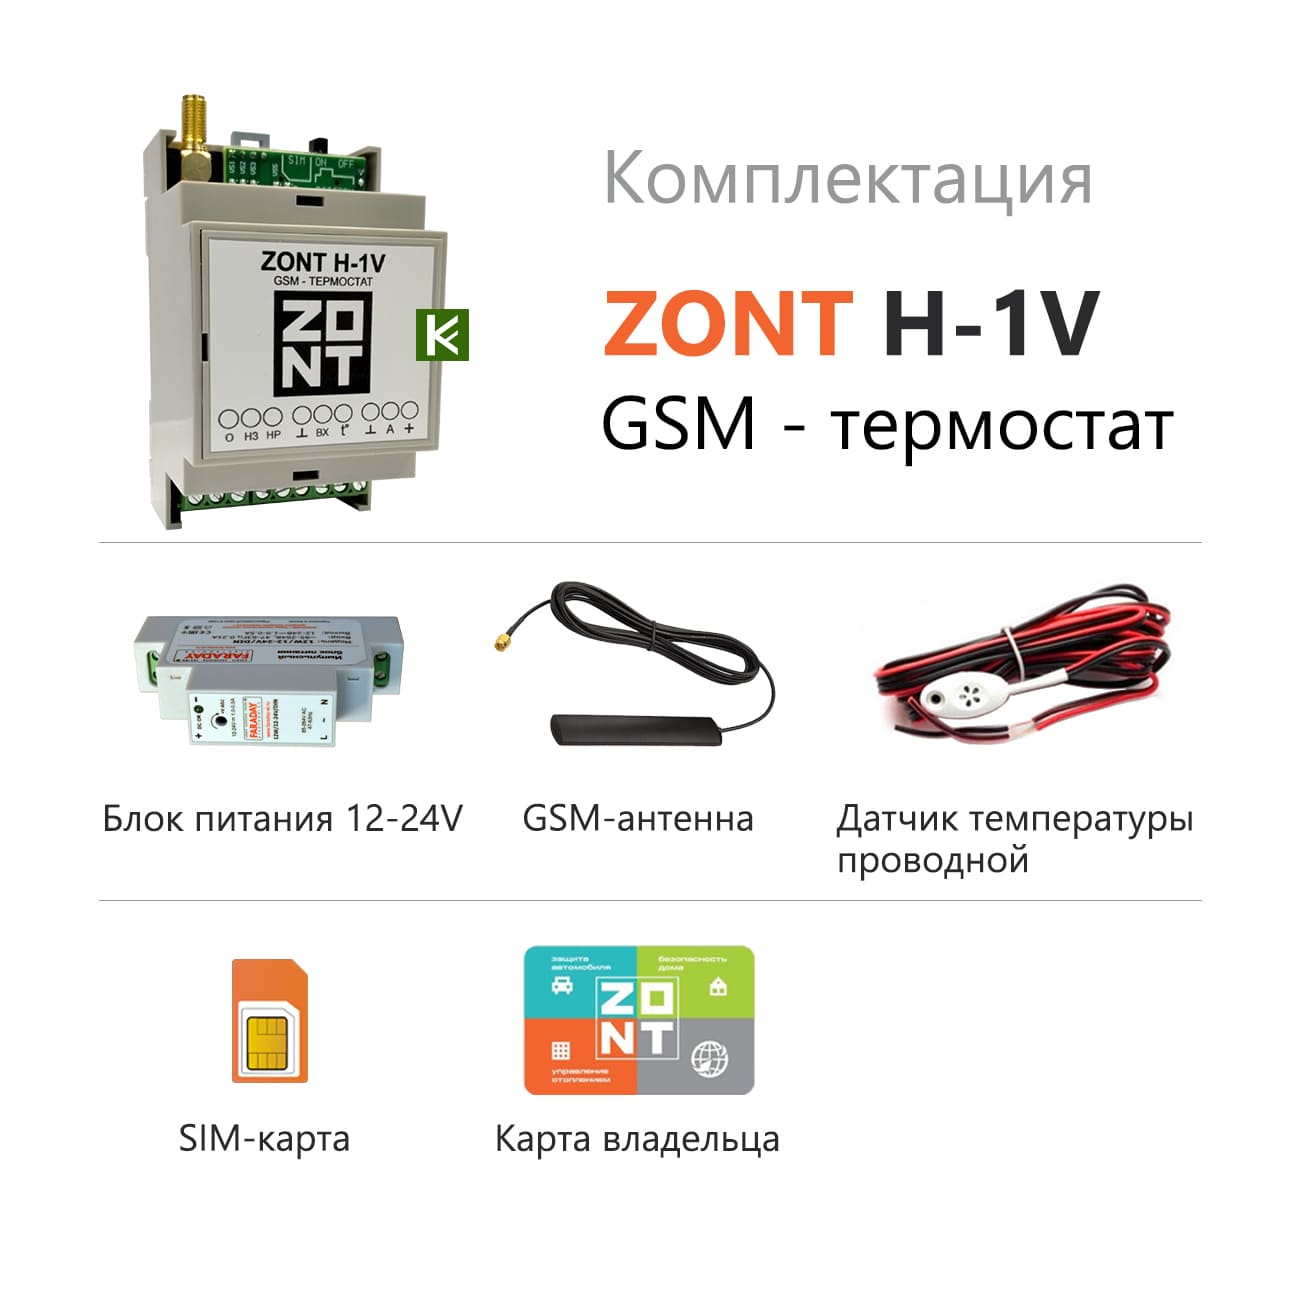 Zont 1v 02. GSM-термостат Zont h-1v. Термостат GSM-climate Zont-h1. Термостат GSM-climate Zont-h1 (112015). GSM-термостат Zont h-1.